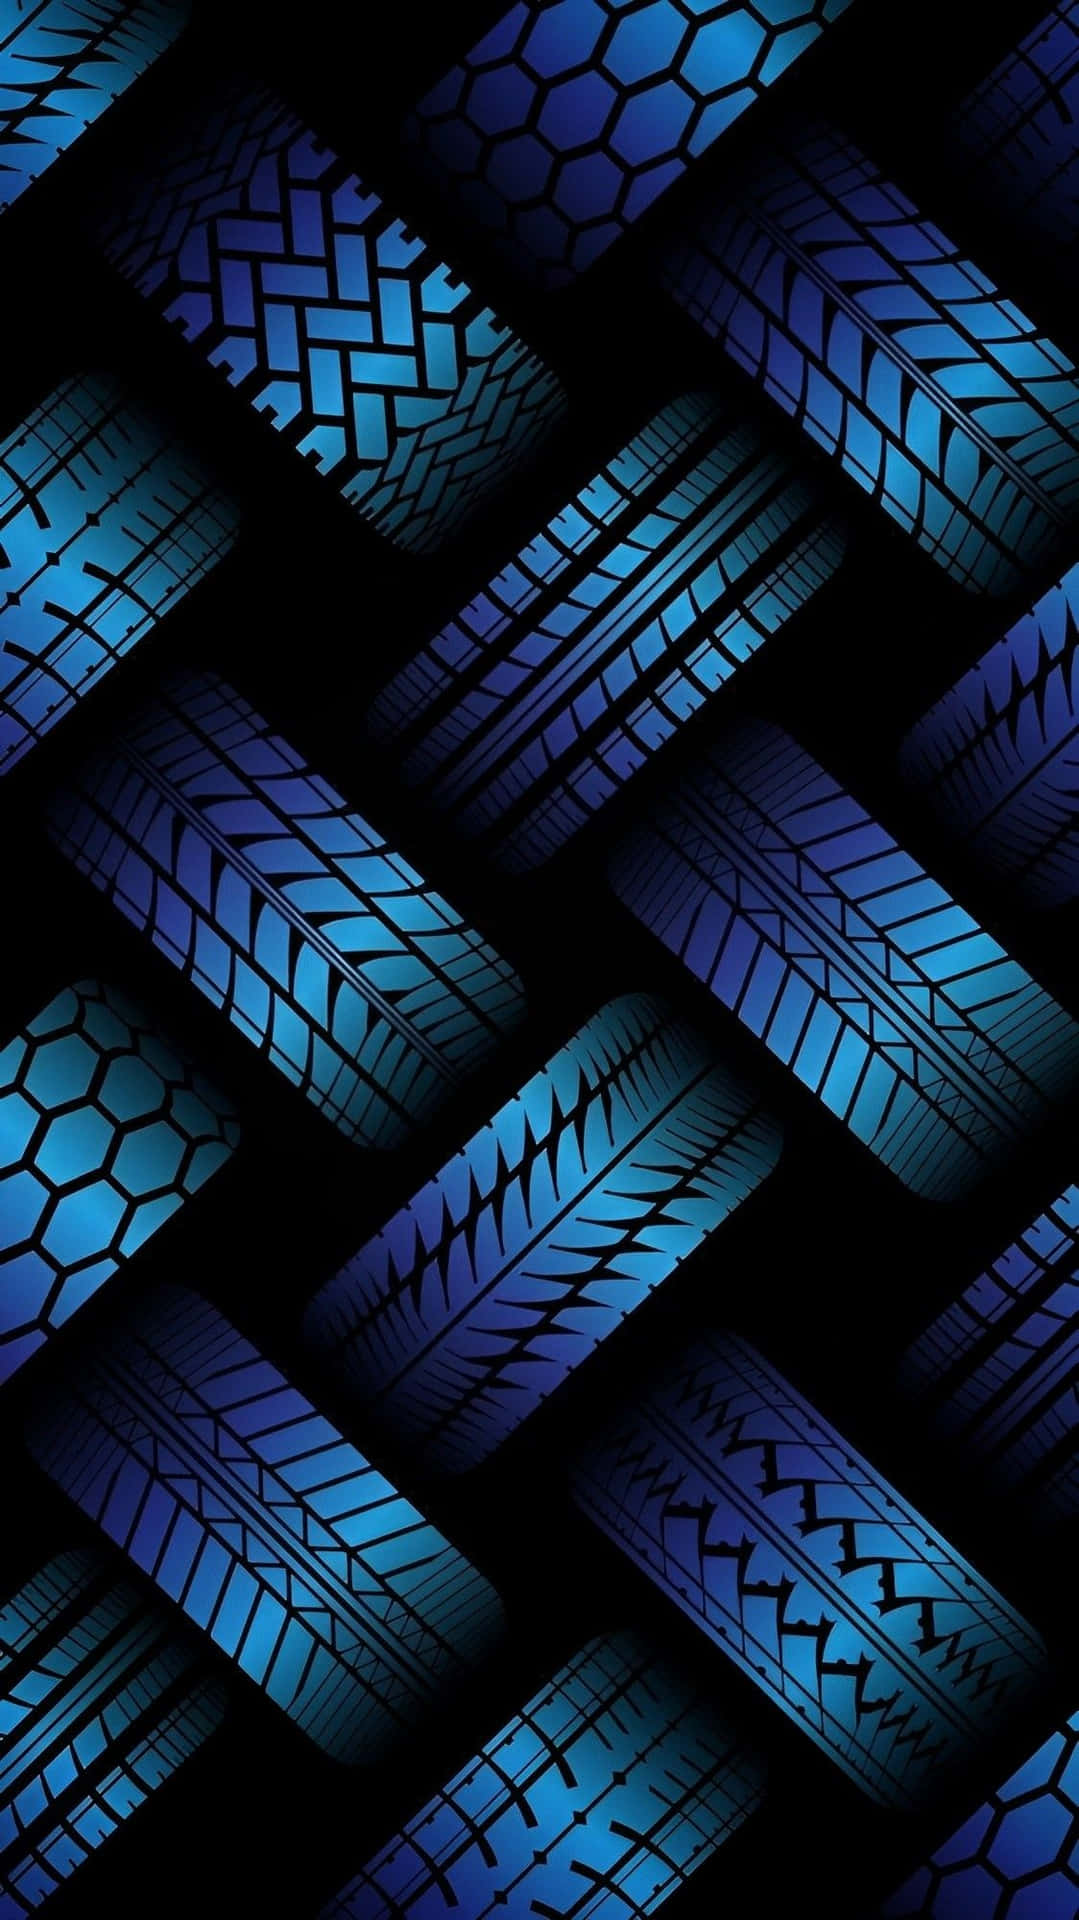 3d Art Pictures Blue Tire Tracks Picture